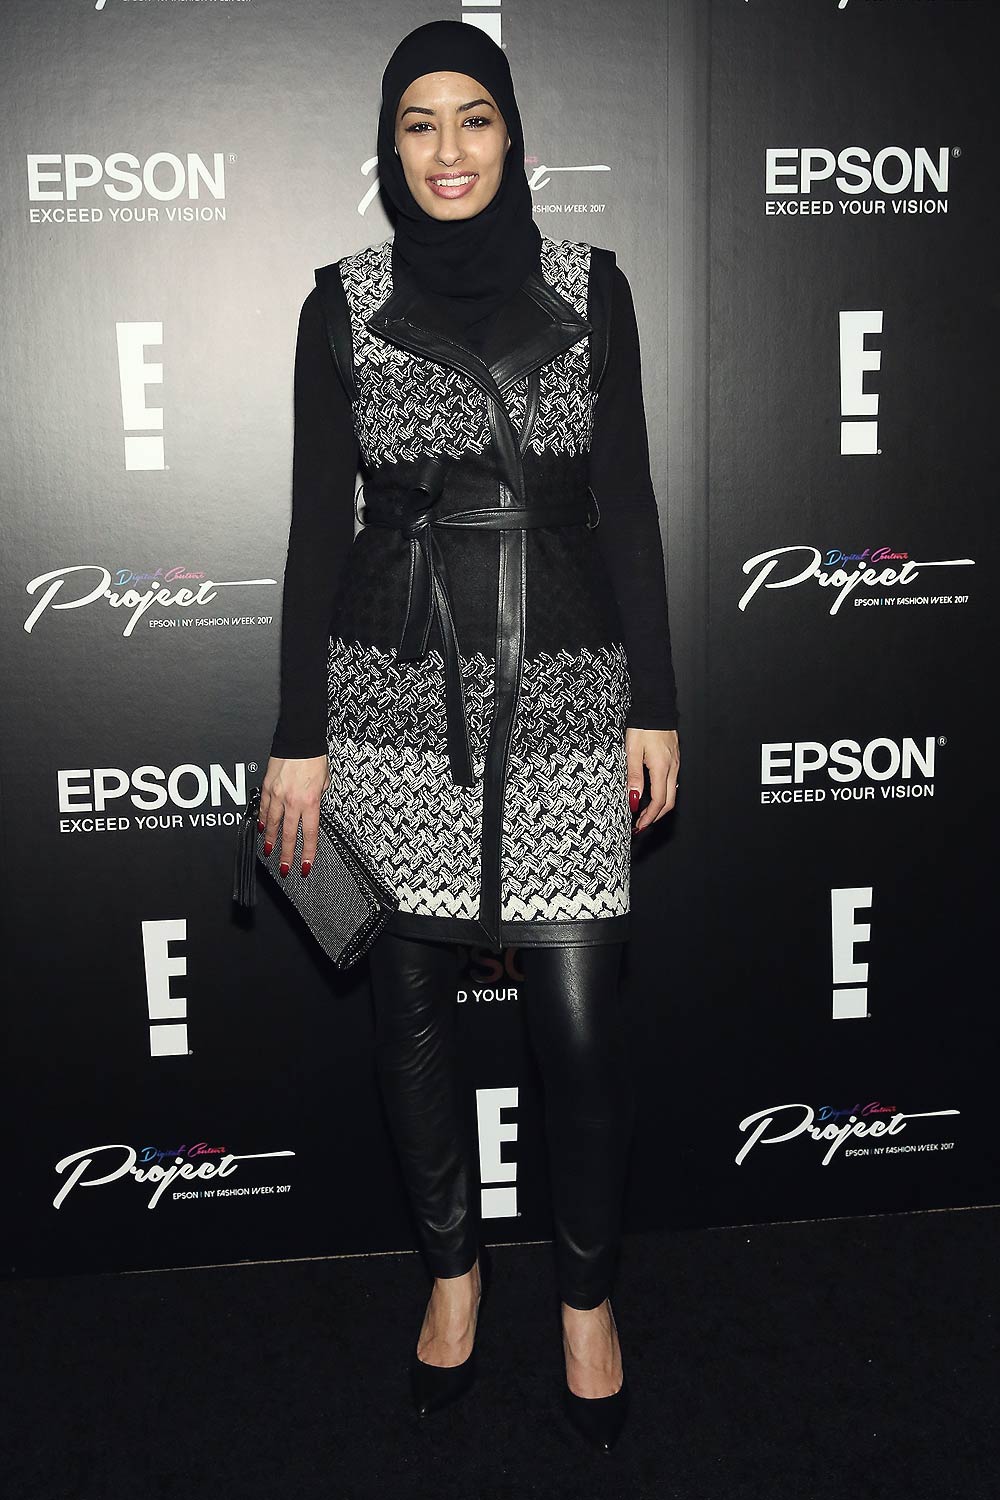 Eman B Fendi attends the Epson Digital Couture Presentation